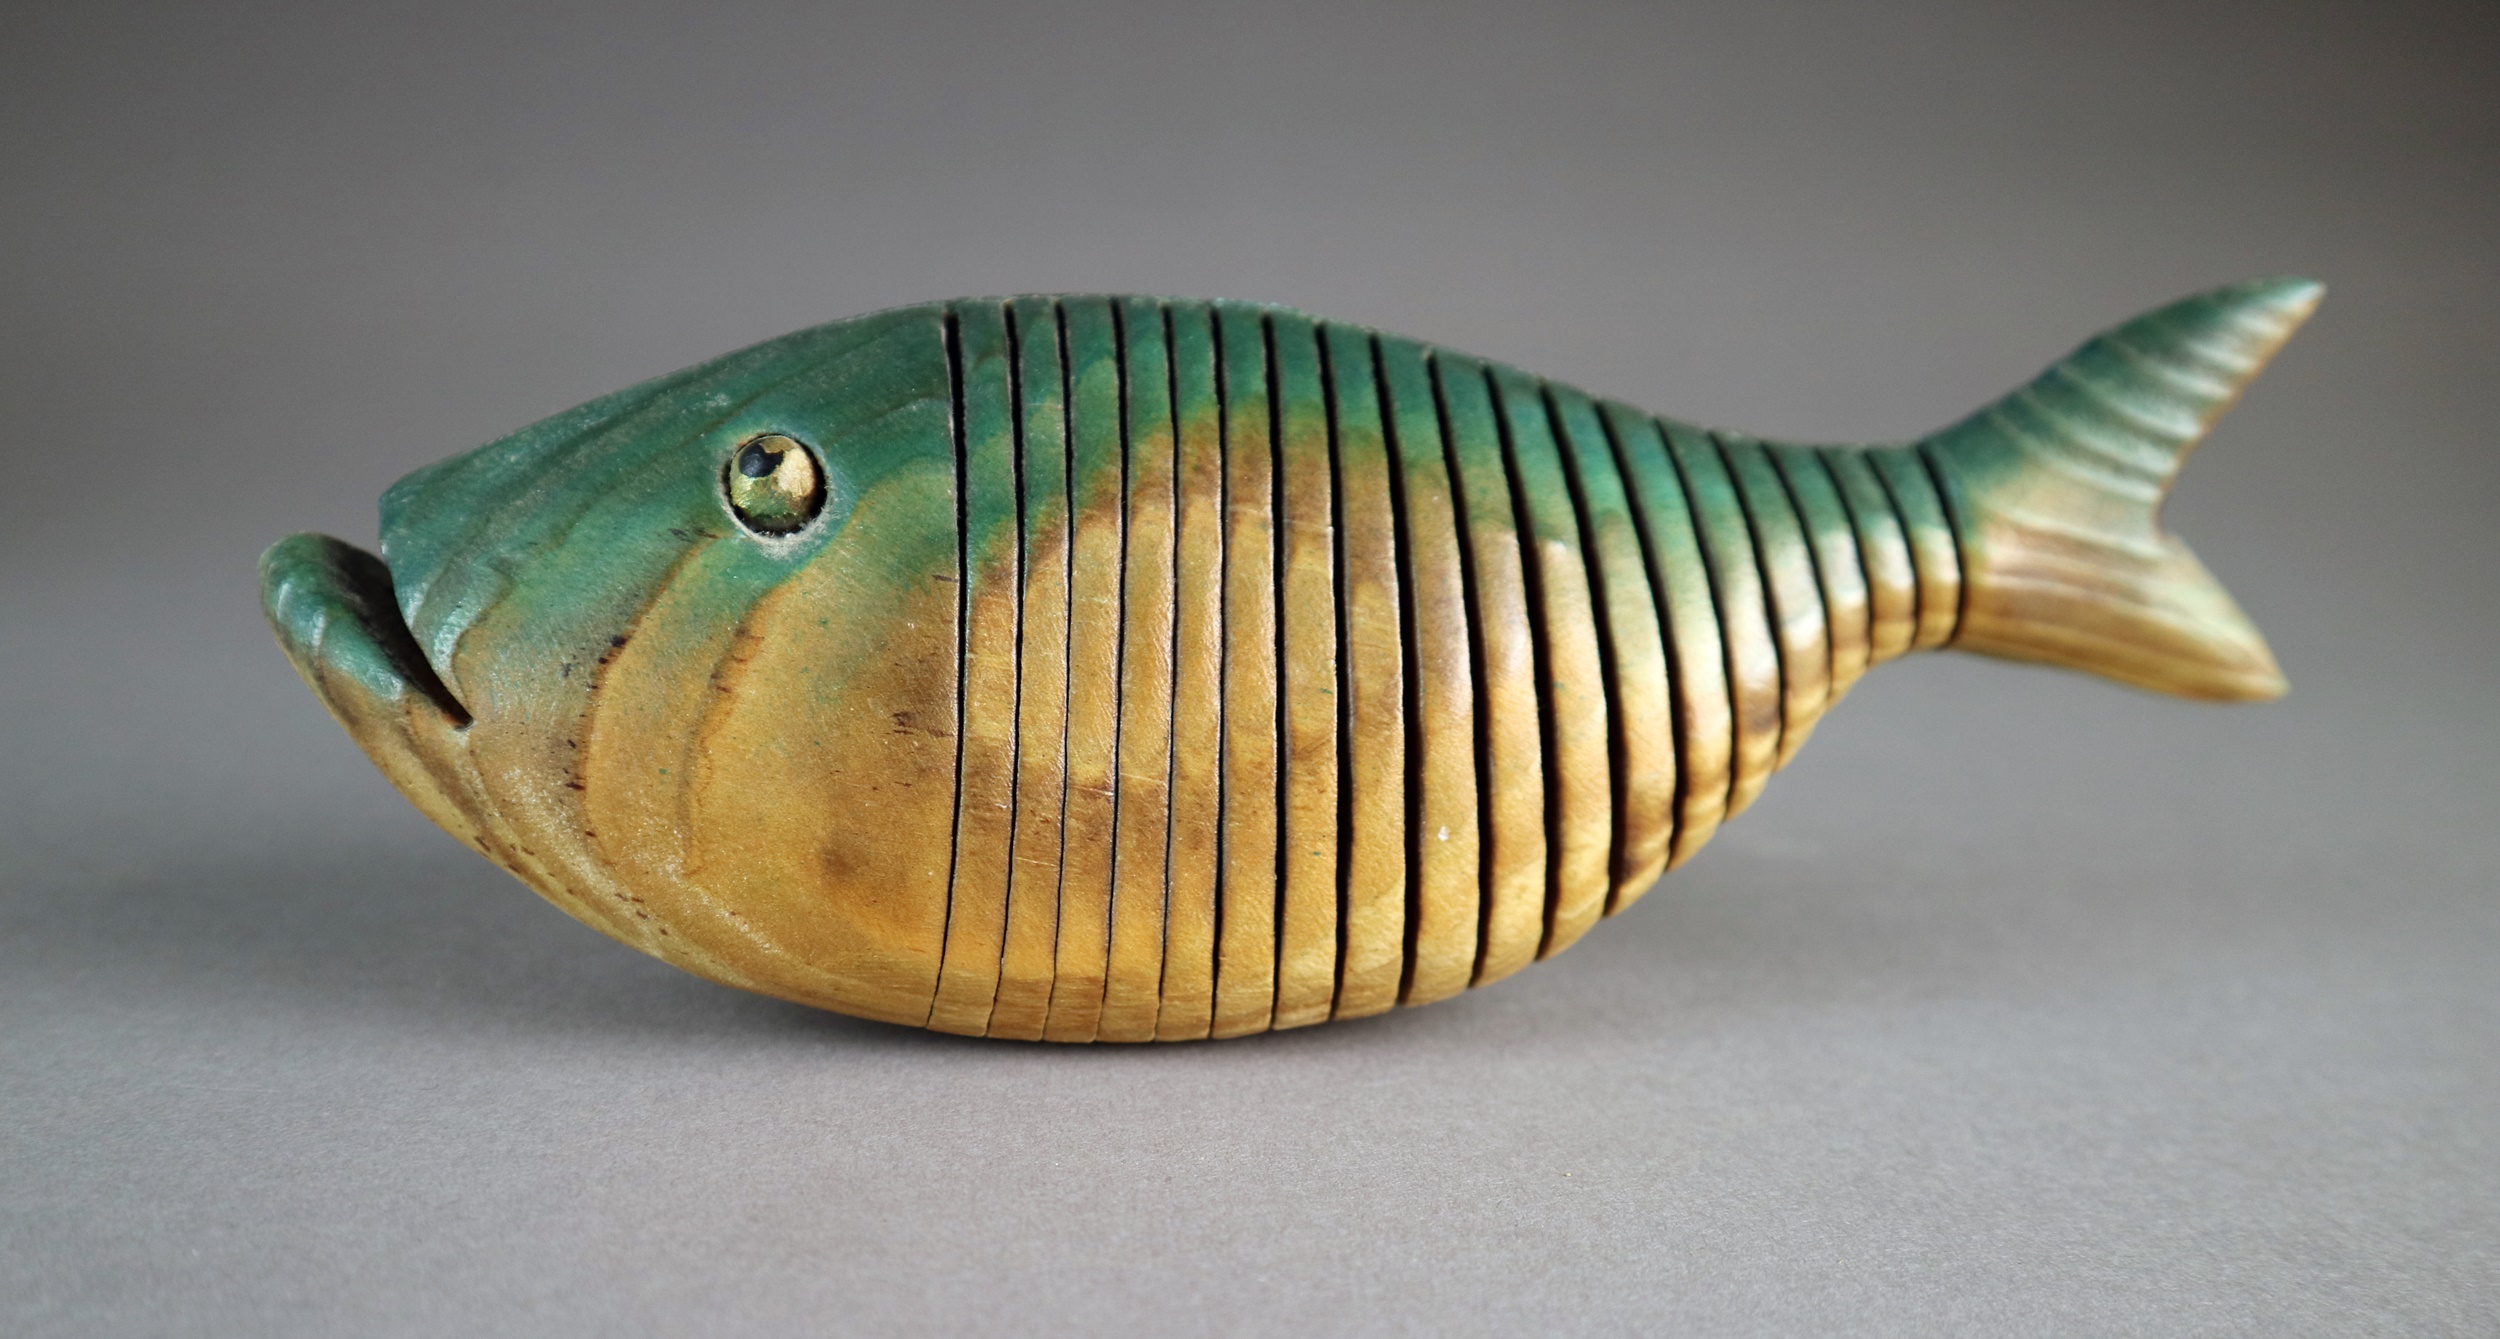 Jeff Soan (British 20th Century) Articulated Fish, wooden sculpture, measurements 9 x 24 x 7 cm